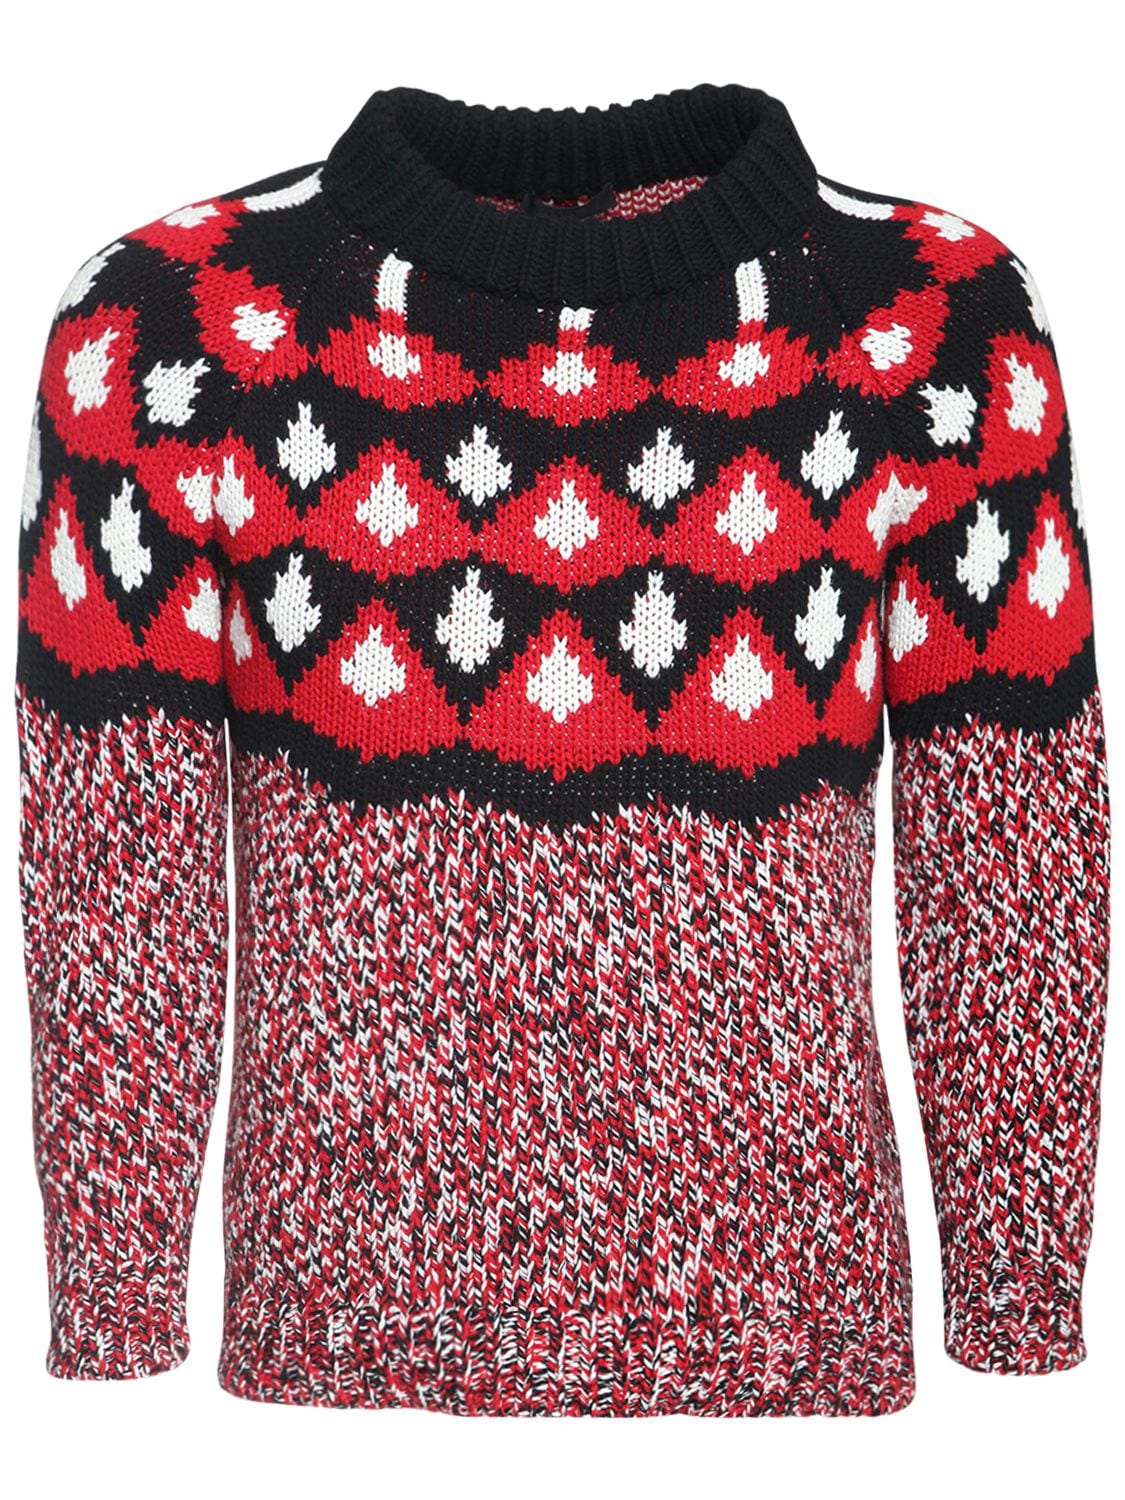 PRADA Jacquard Wool & Cashmere Knit Sweater